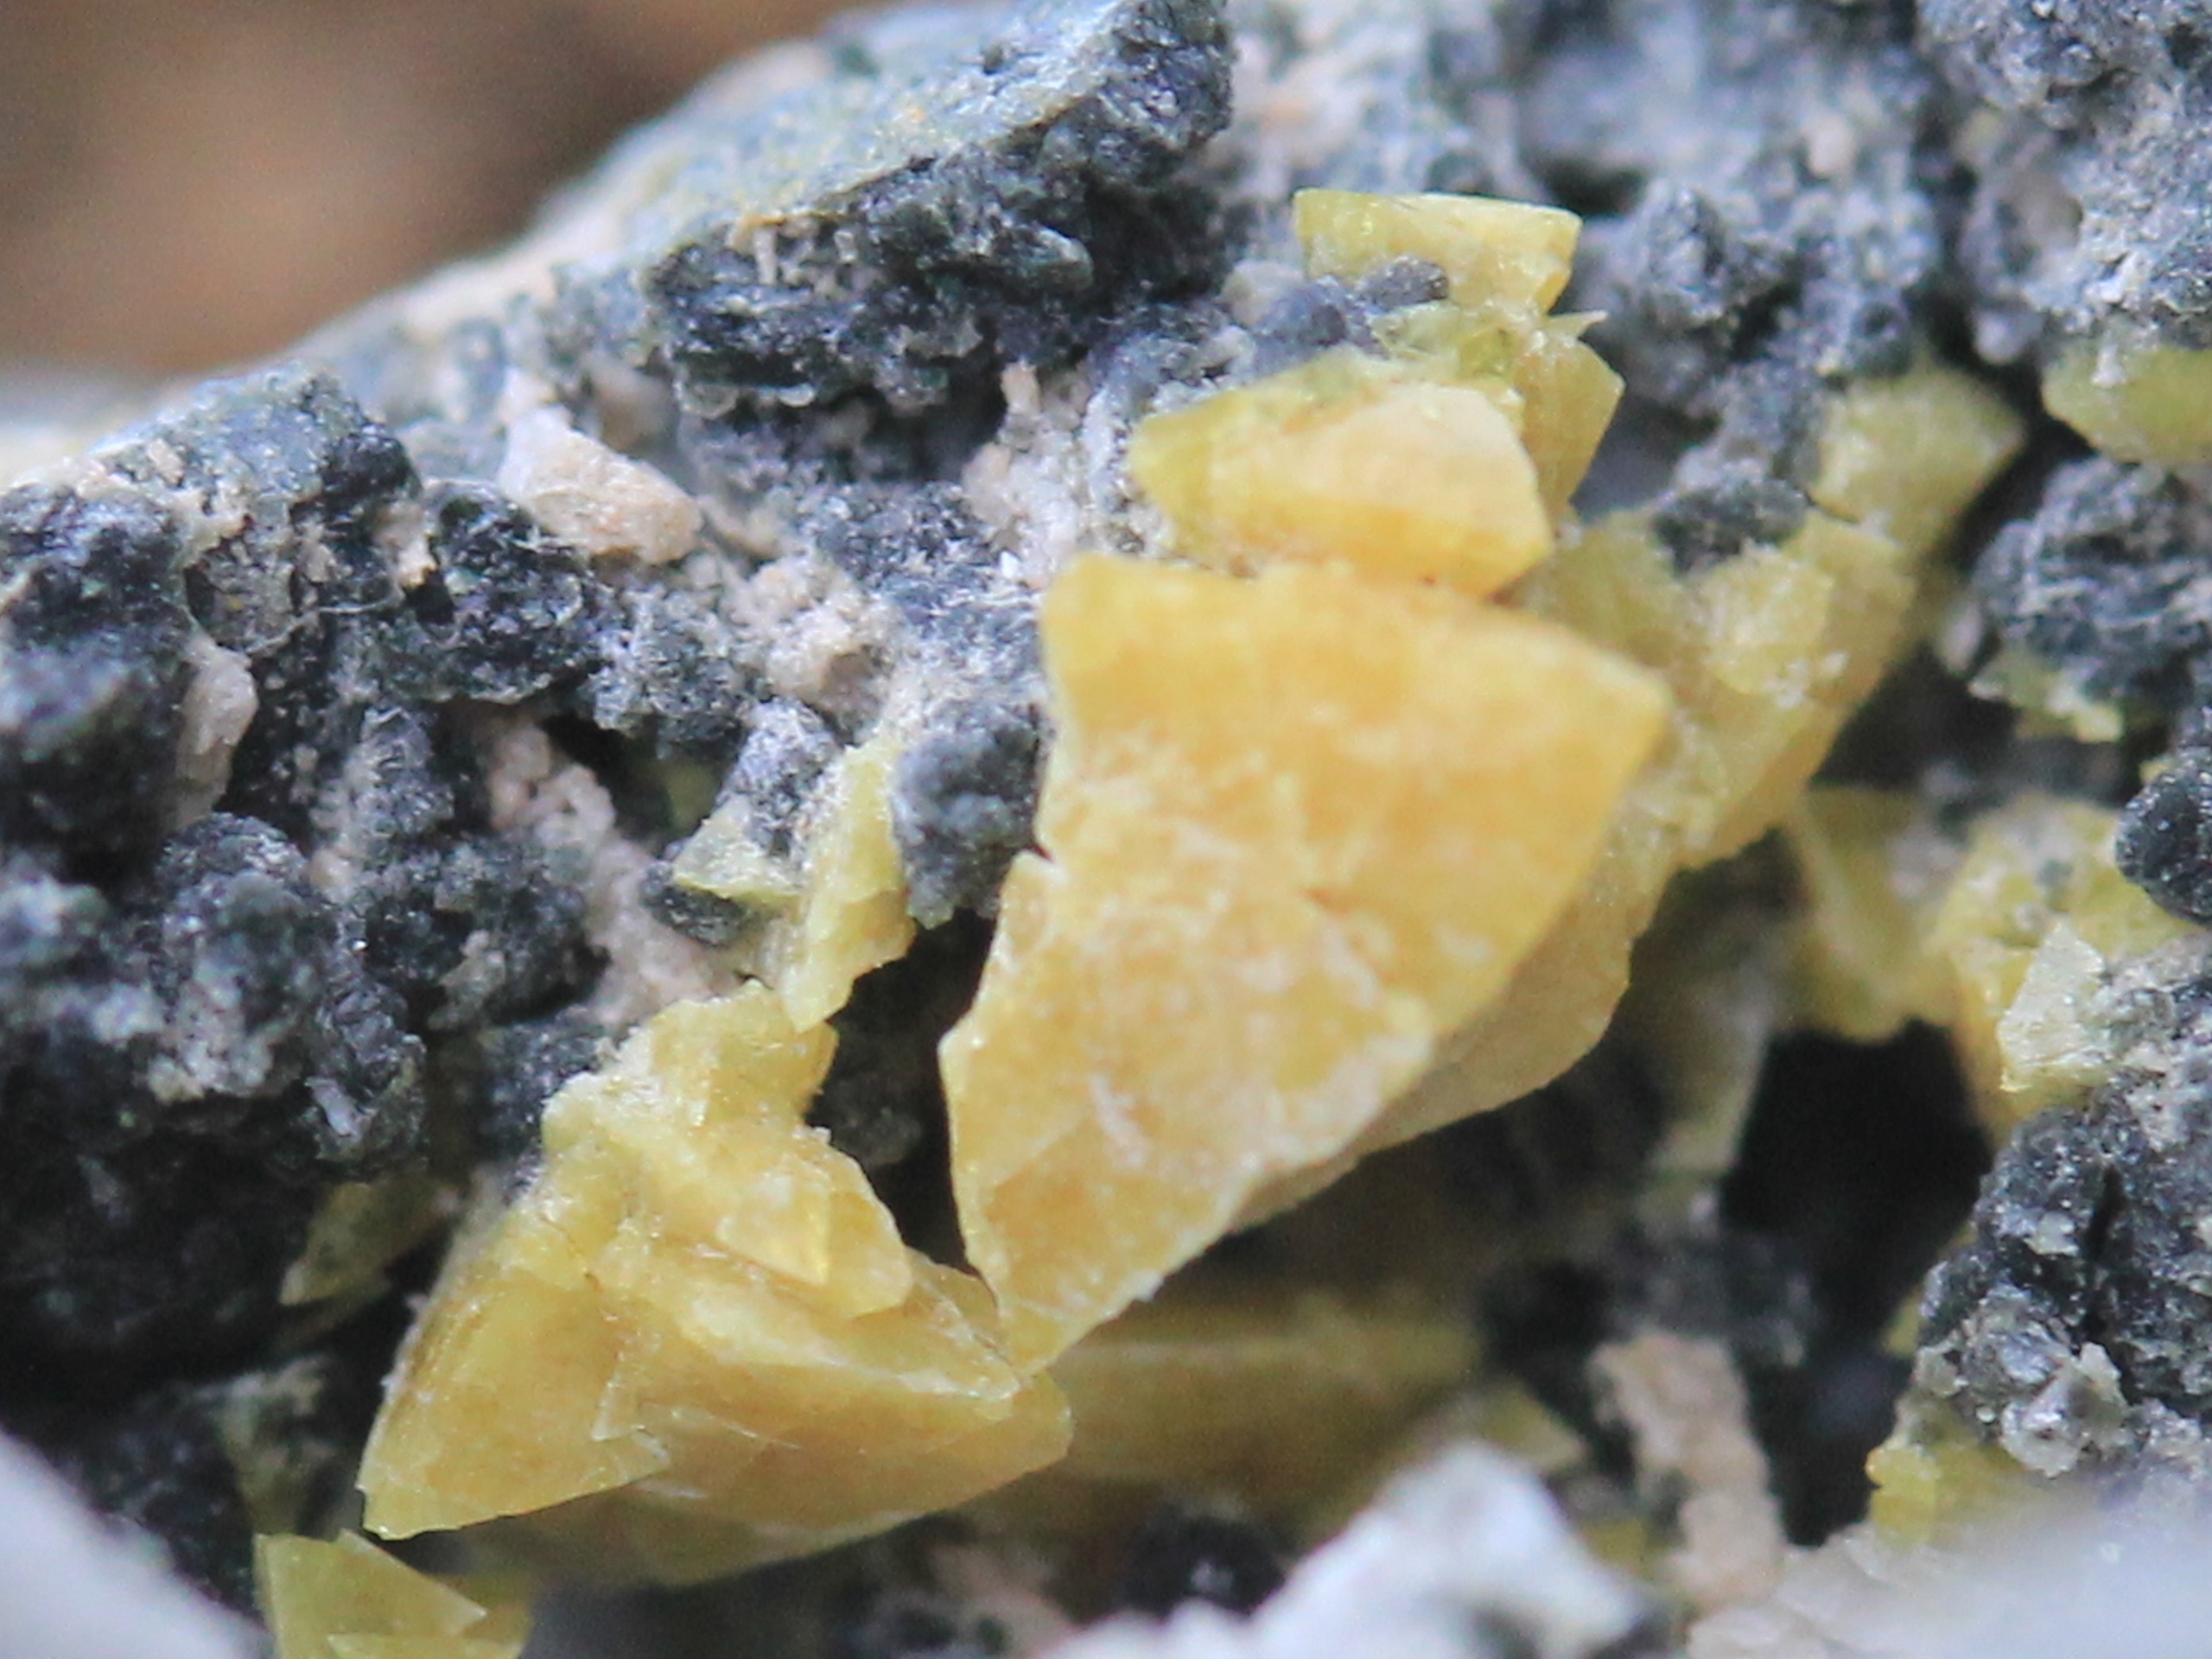 Helvine crystals